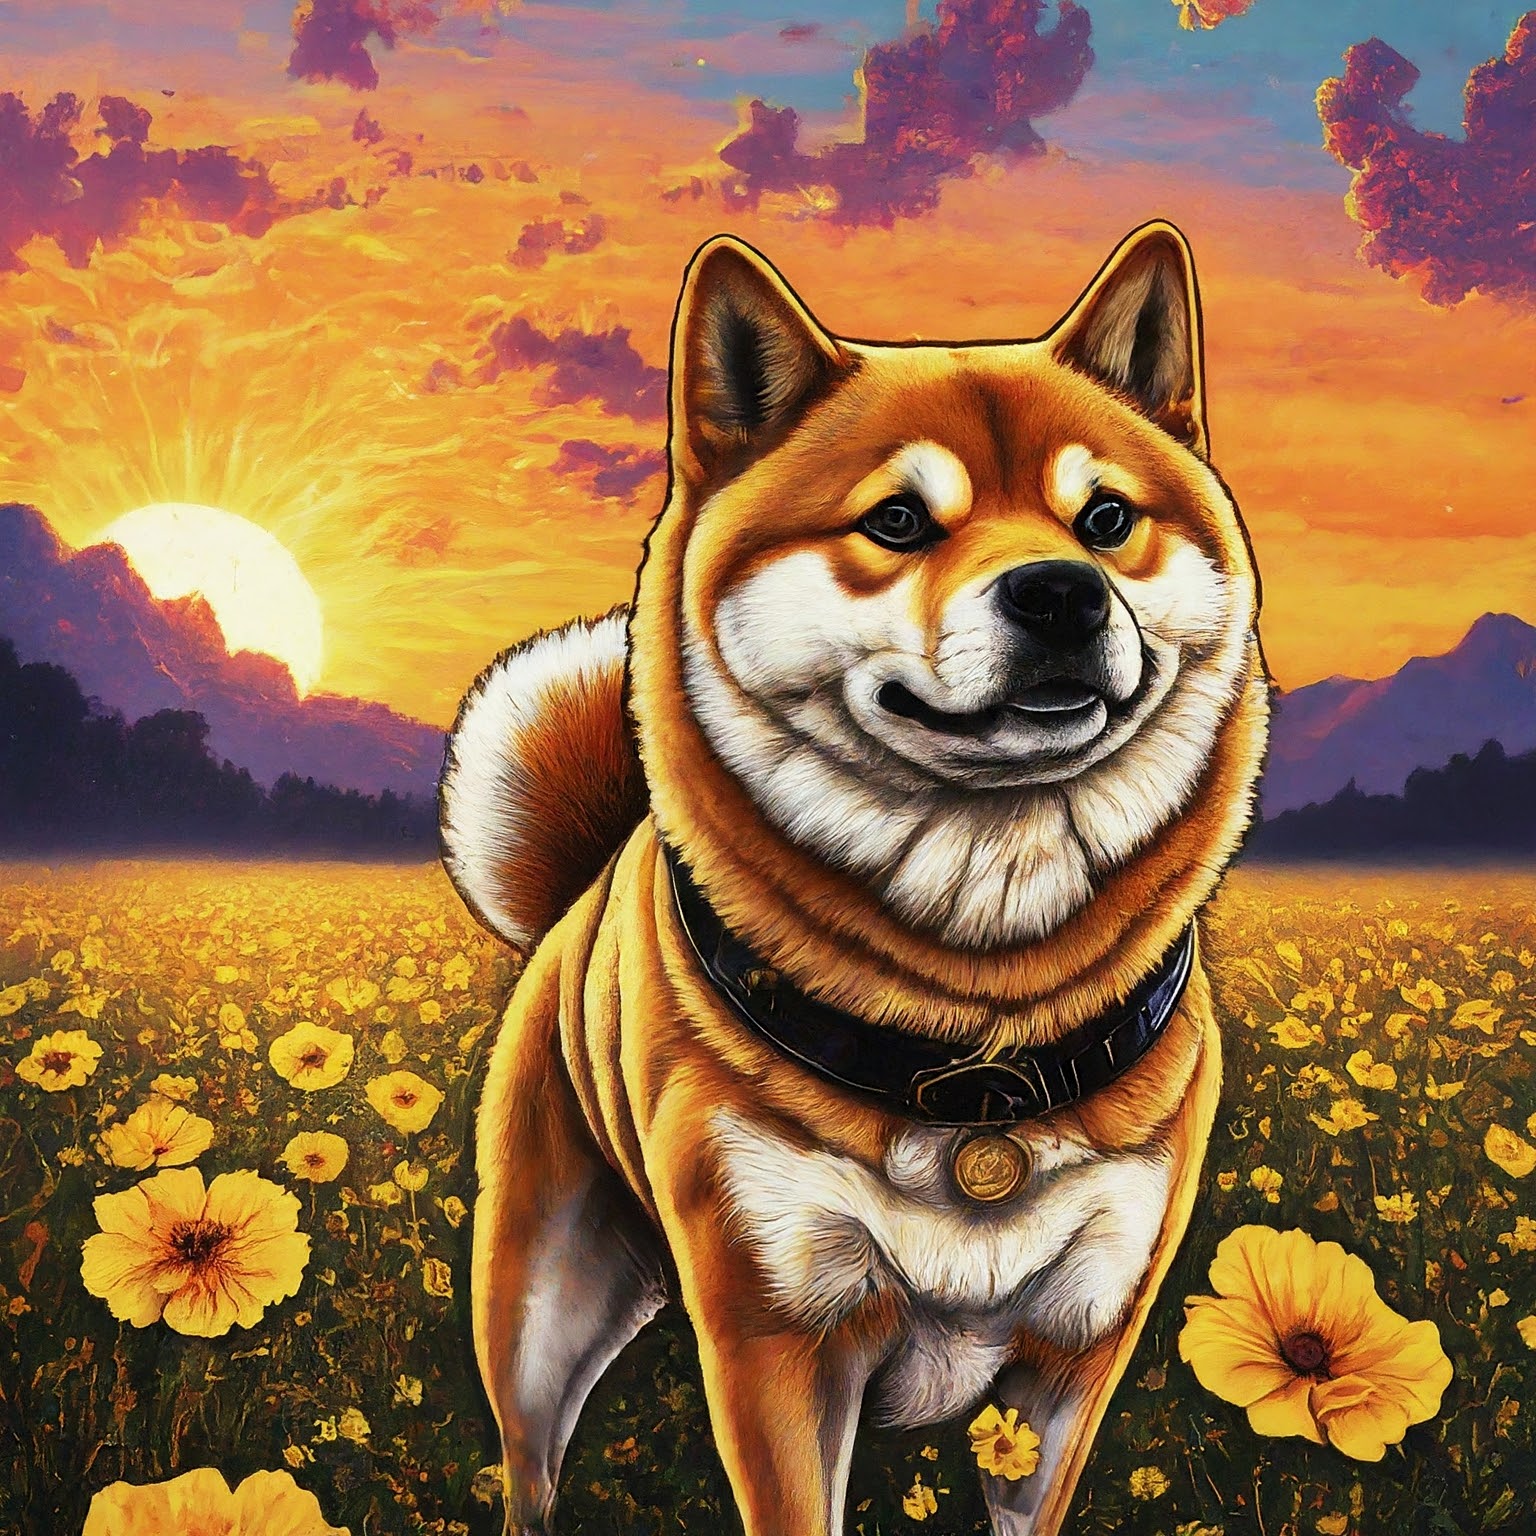 Kabosu, the Shiba Inu Who Inspired the Doge Meme, Has Died